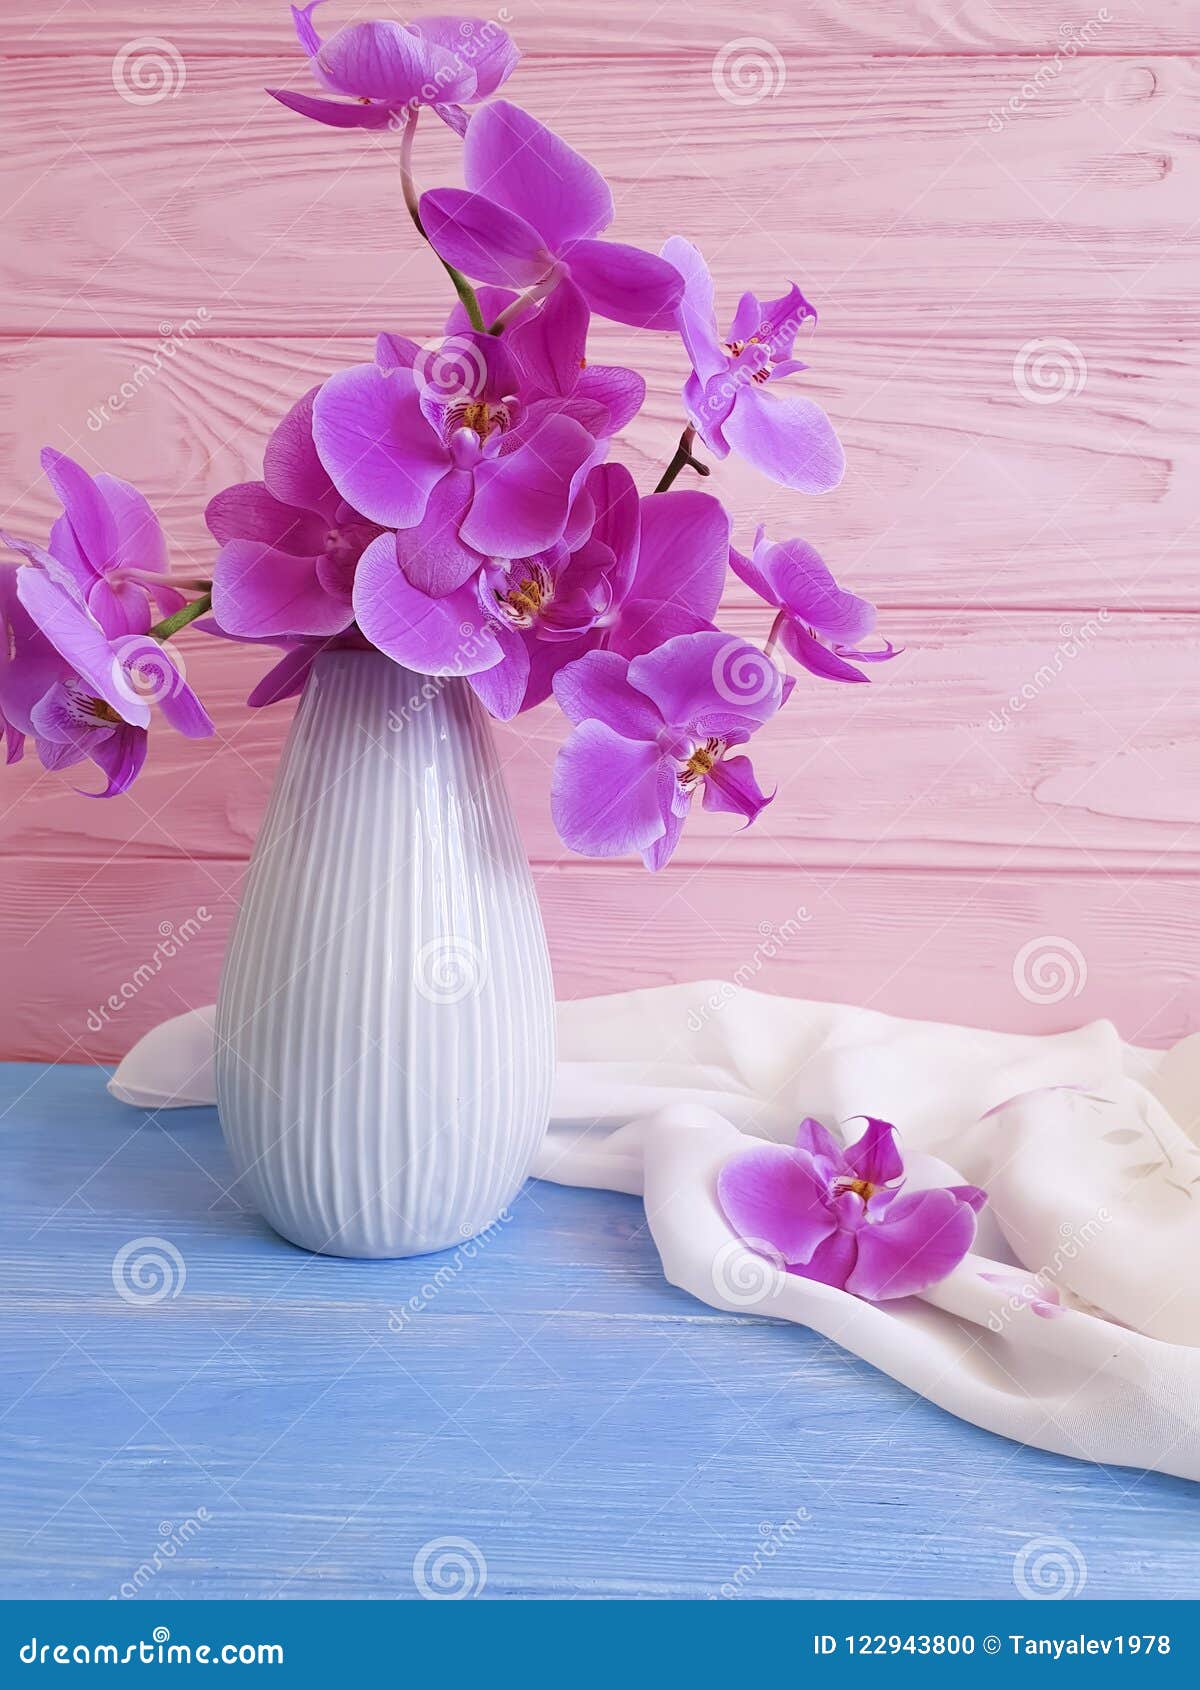 Vase Orchid Flower Bouquet Vintage Modern Decorate Elegance Arrangement On A Wooden Background Stock Photo Image Of Congratulation Beauty 122943800